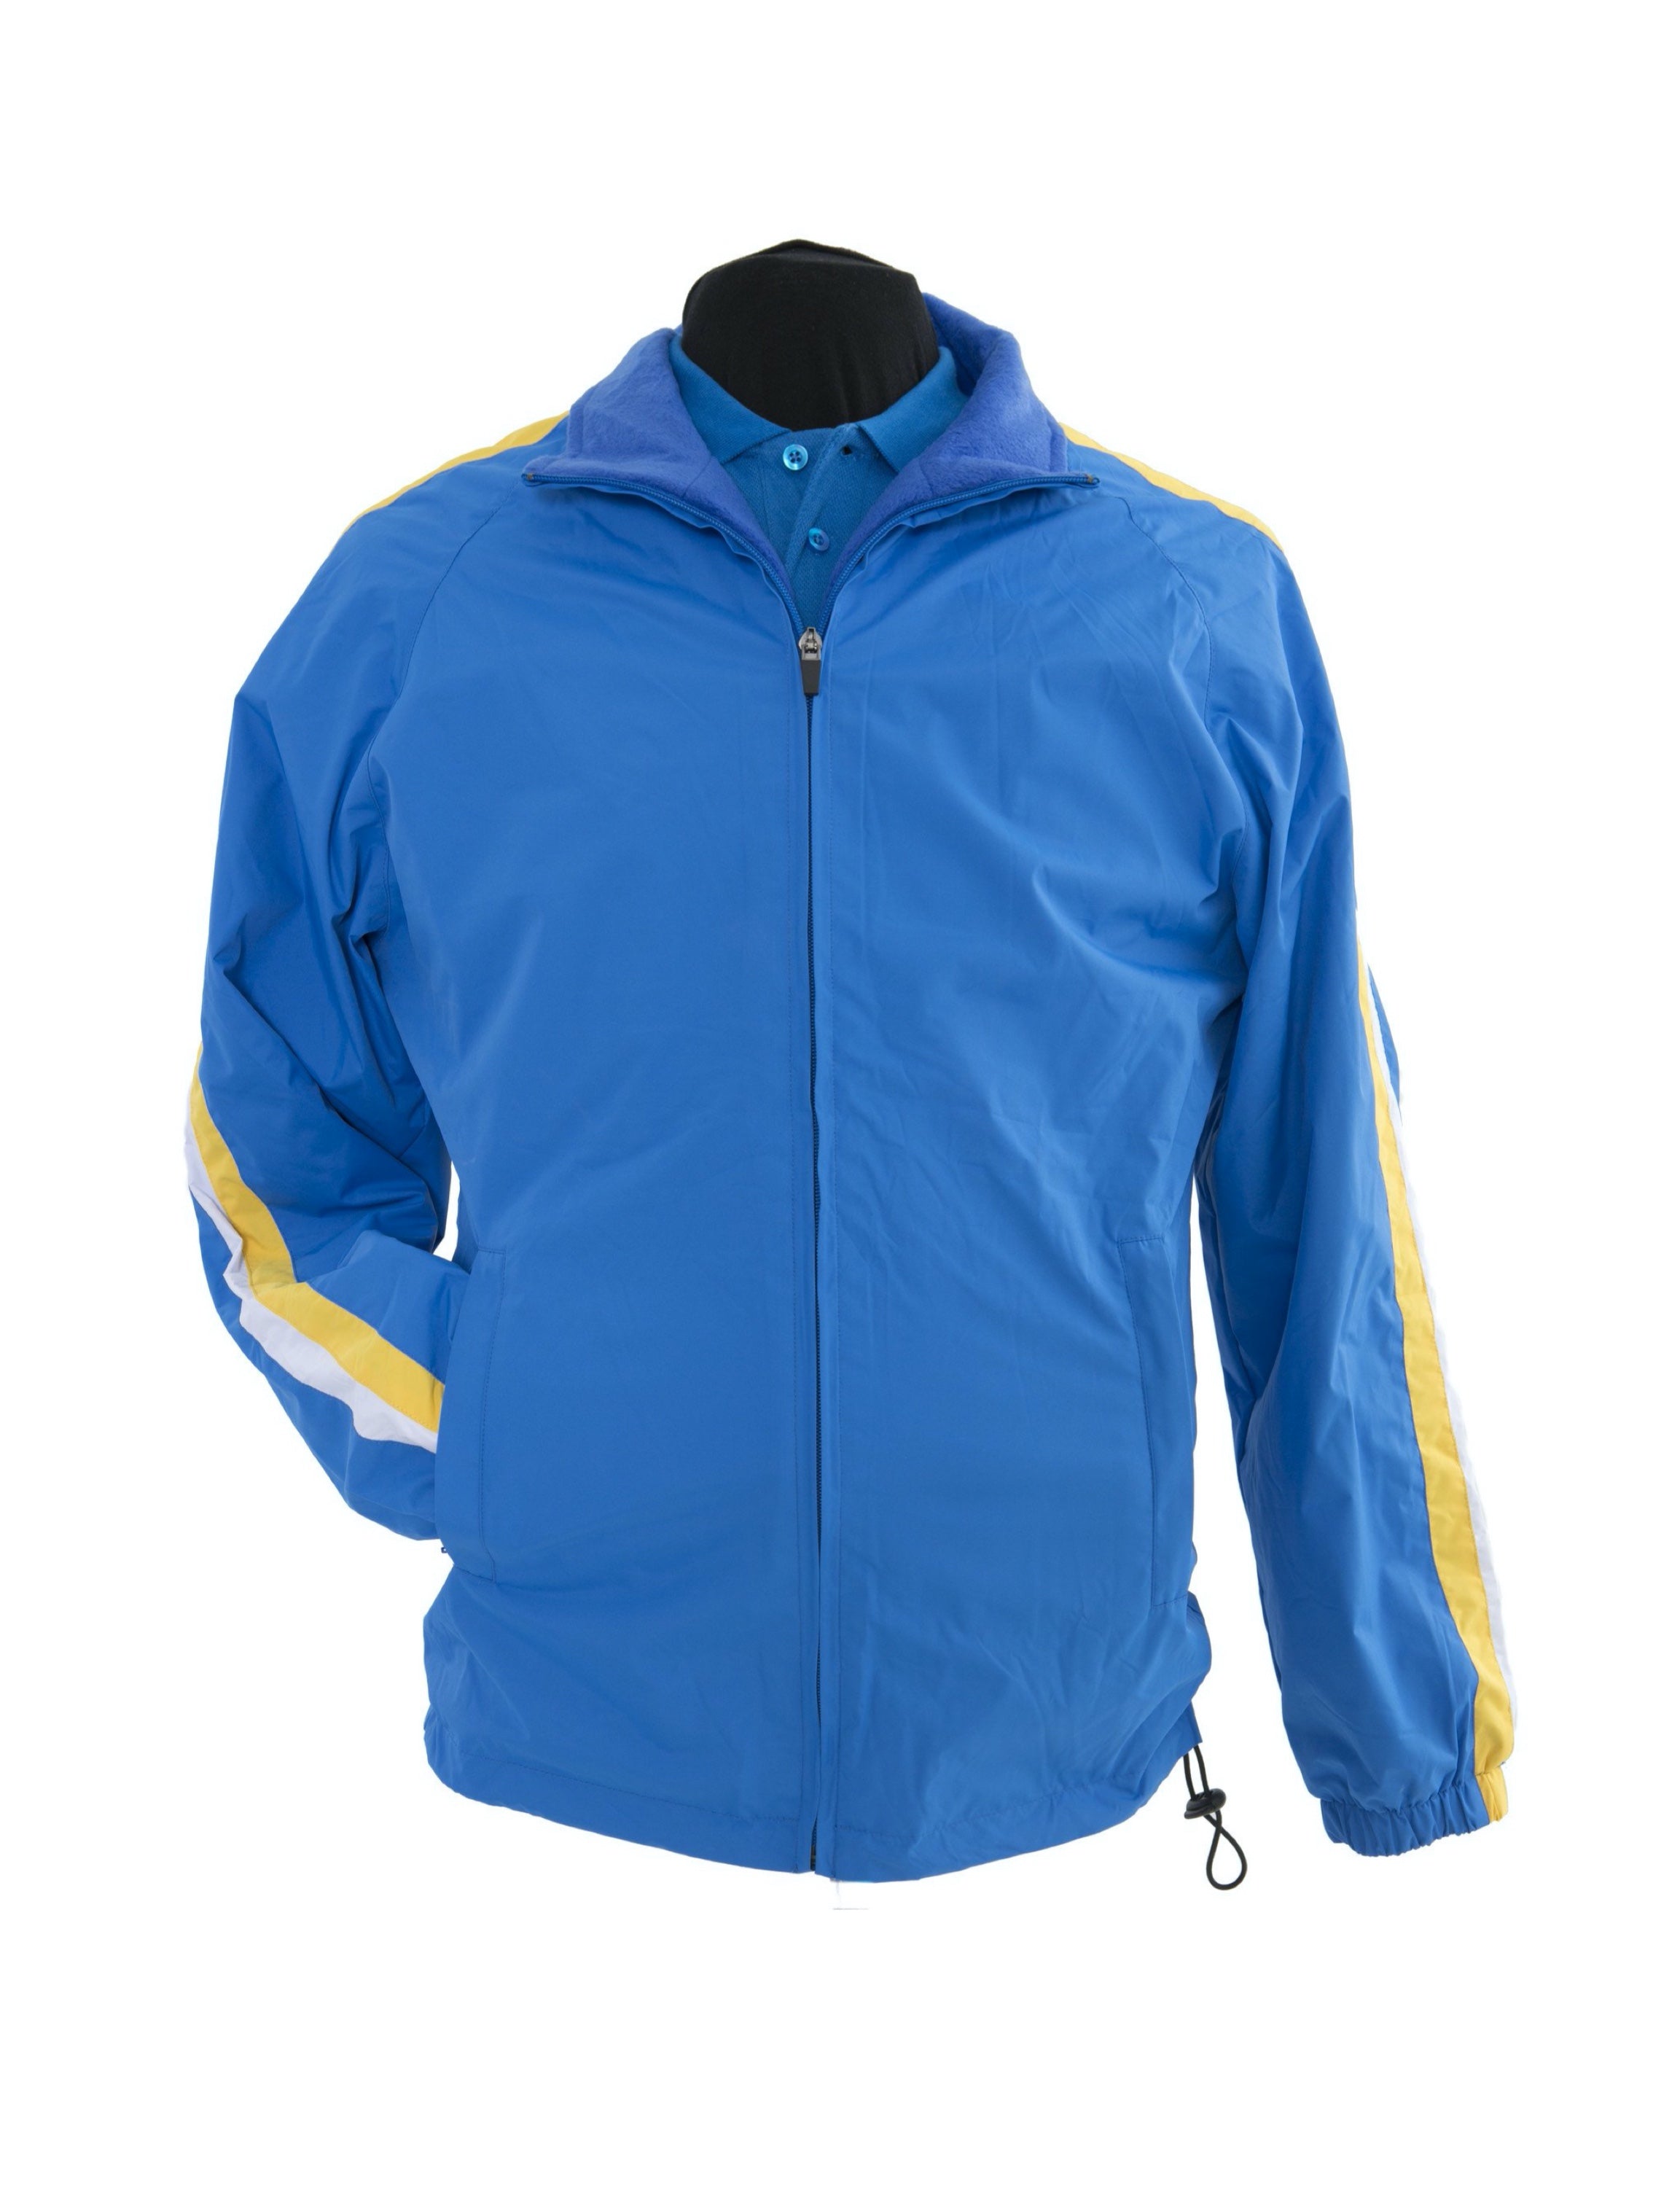 IDEA Blue MW Jacket - Adults / Teen – The Uniform Superstore